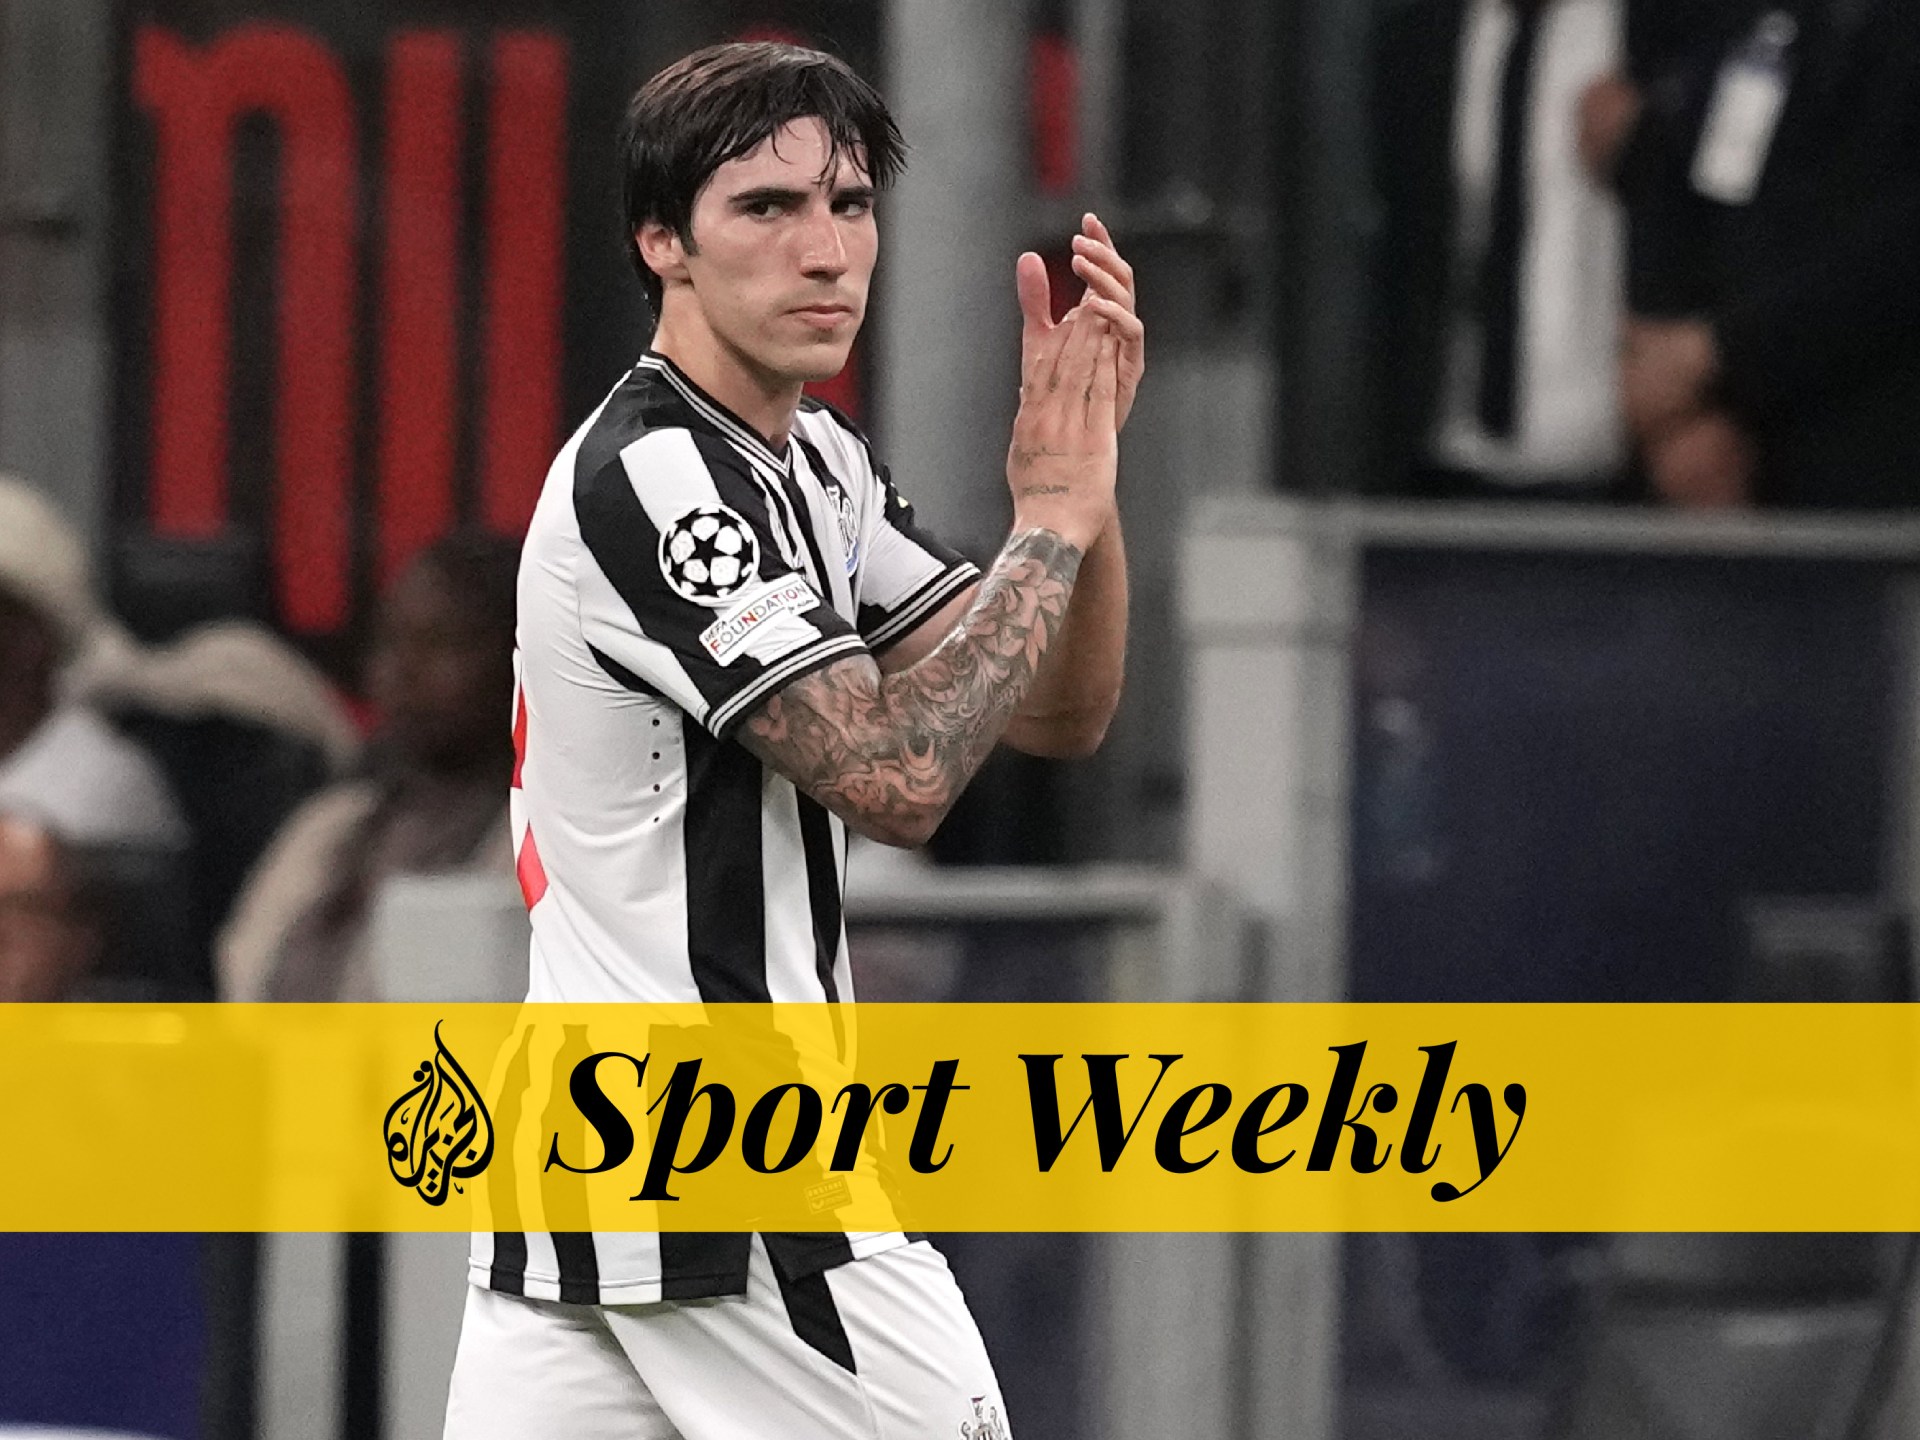 Sport weekly: Sandro Tonali and football’s gambling problem – Al Jazeera English